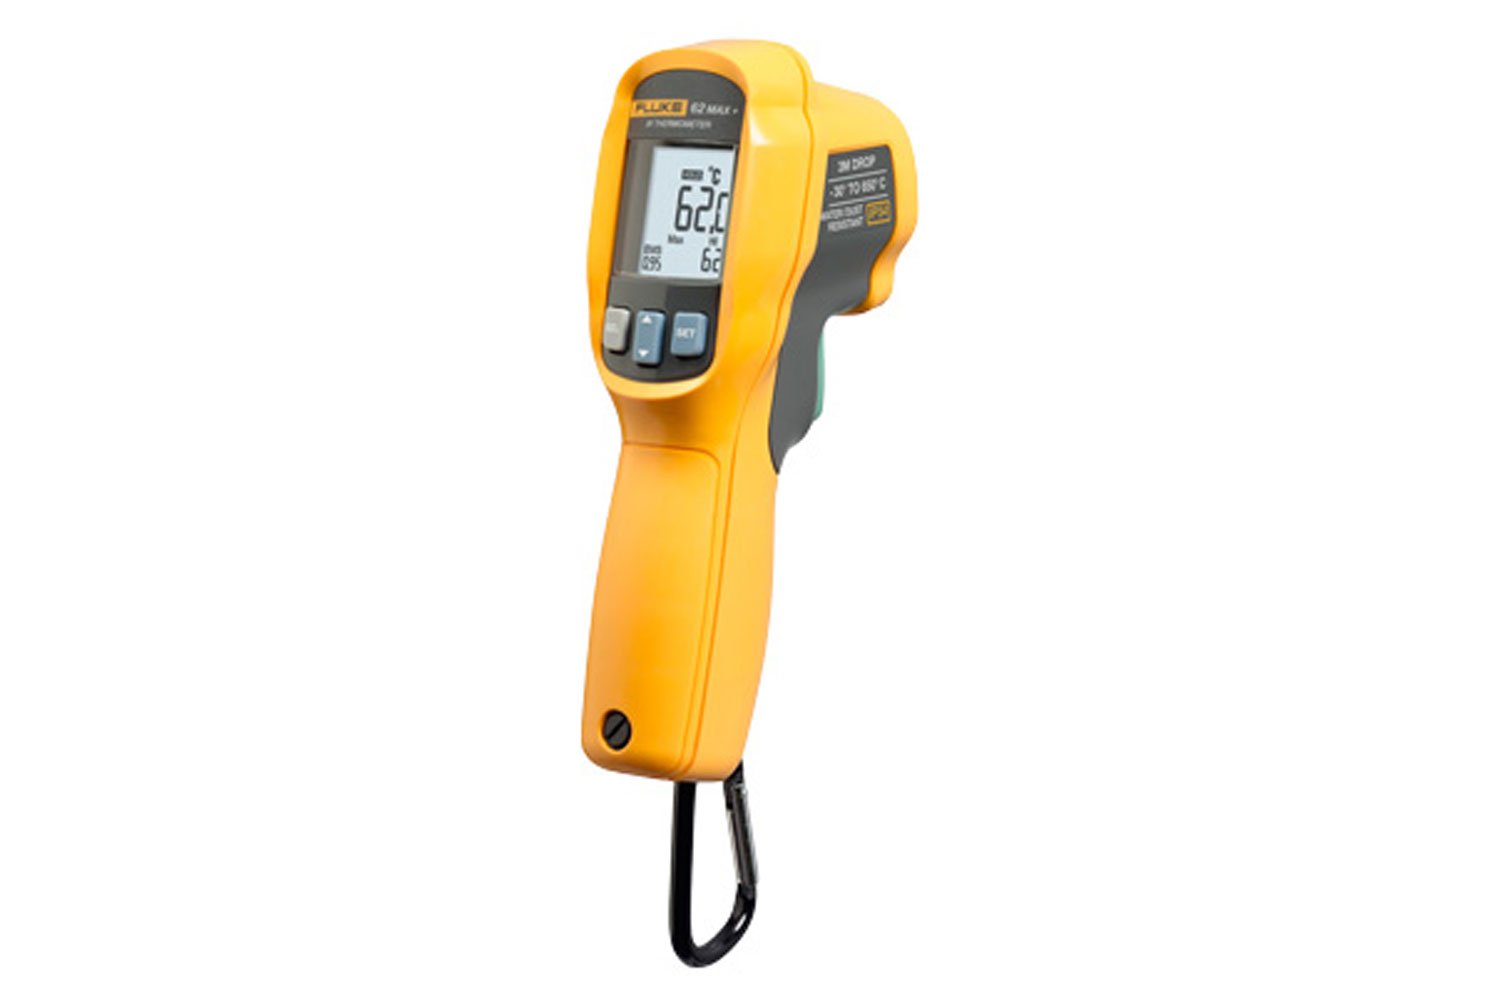 Handheld Thermometer, Fluke 62MAX+ IR Laser Thermometer